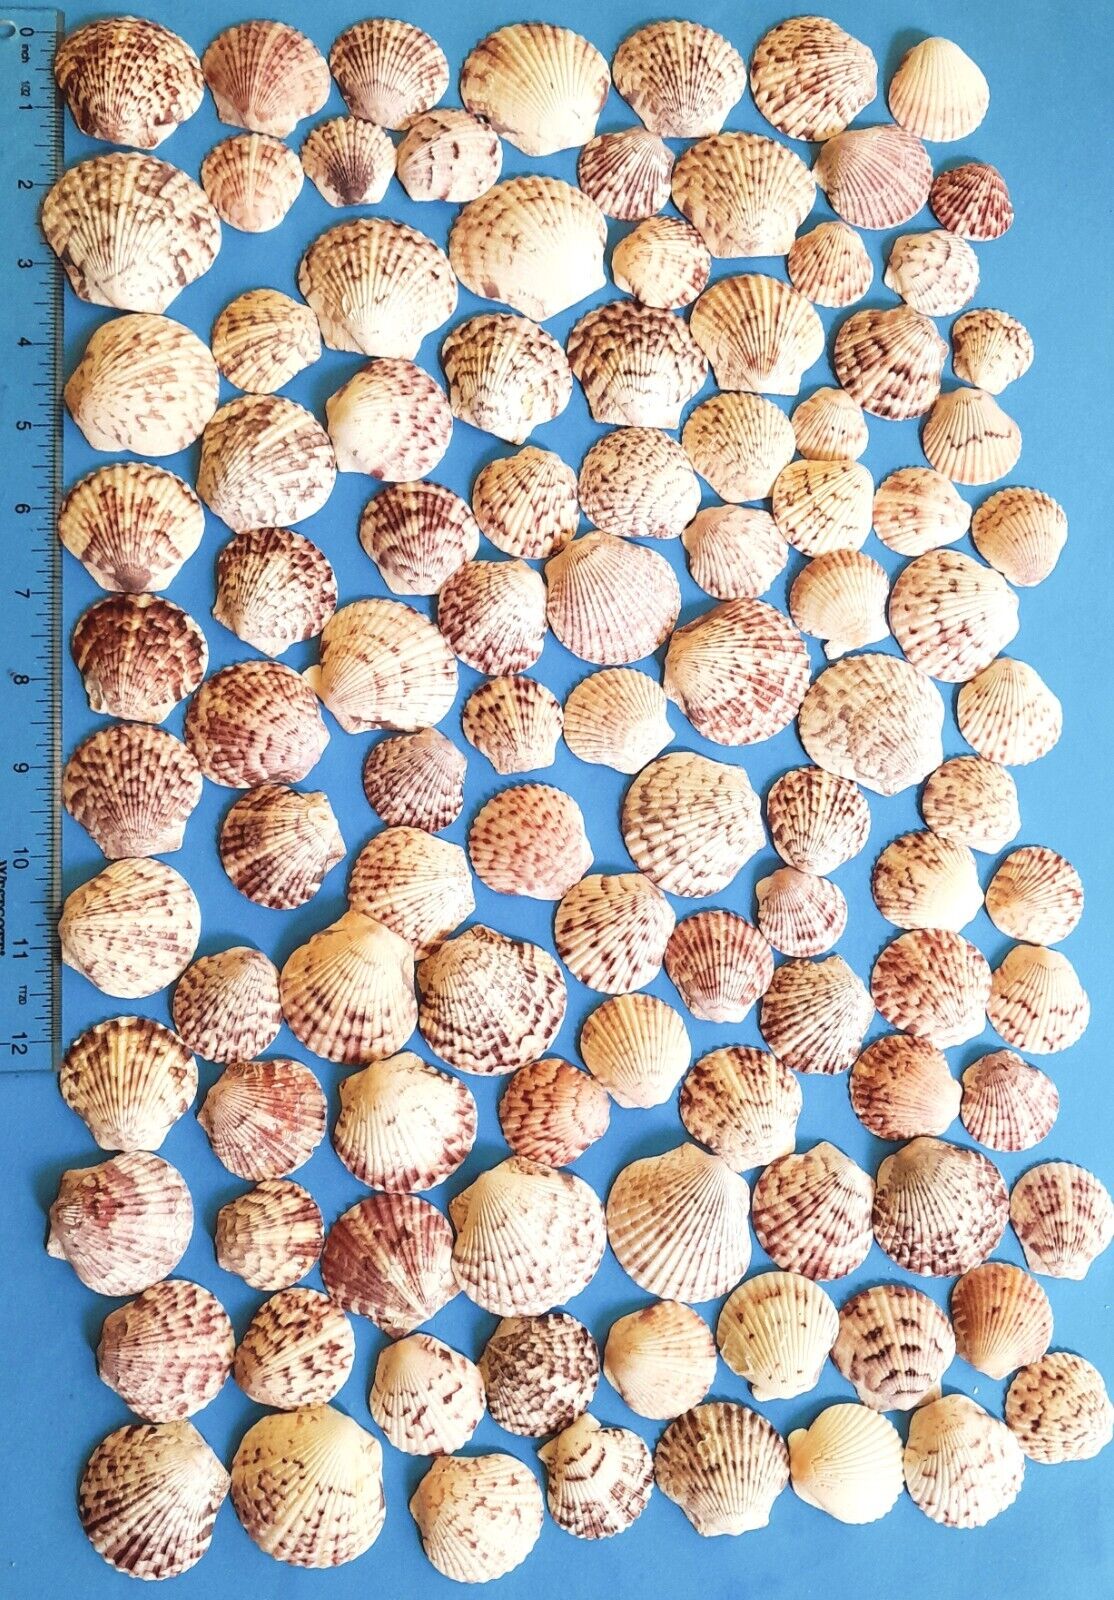 100 Calico Scallop Seashells Hand Picked Cleaned - Sanibel Island 1\